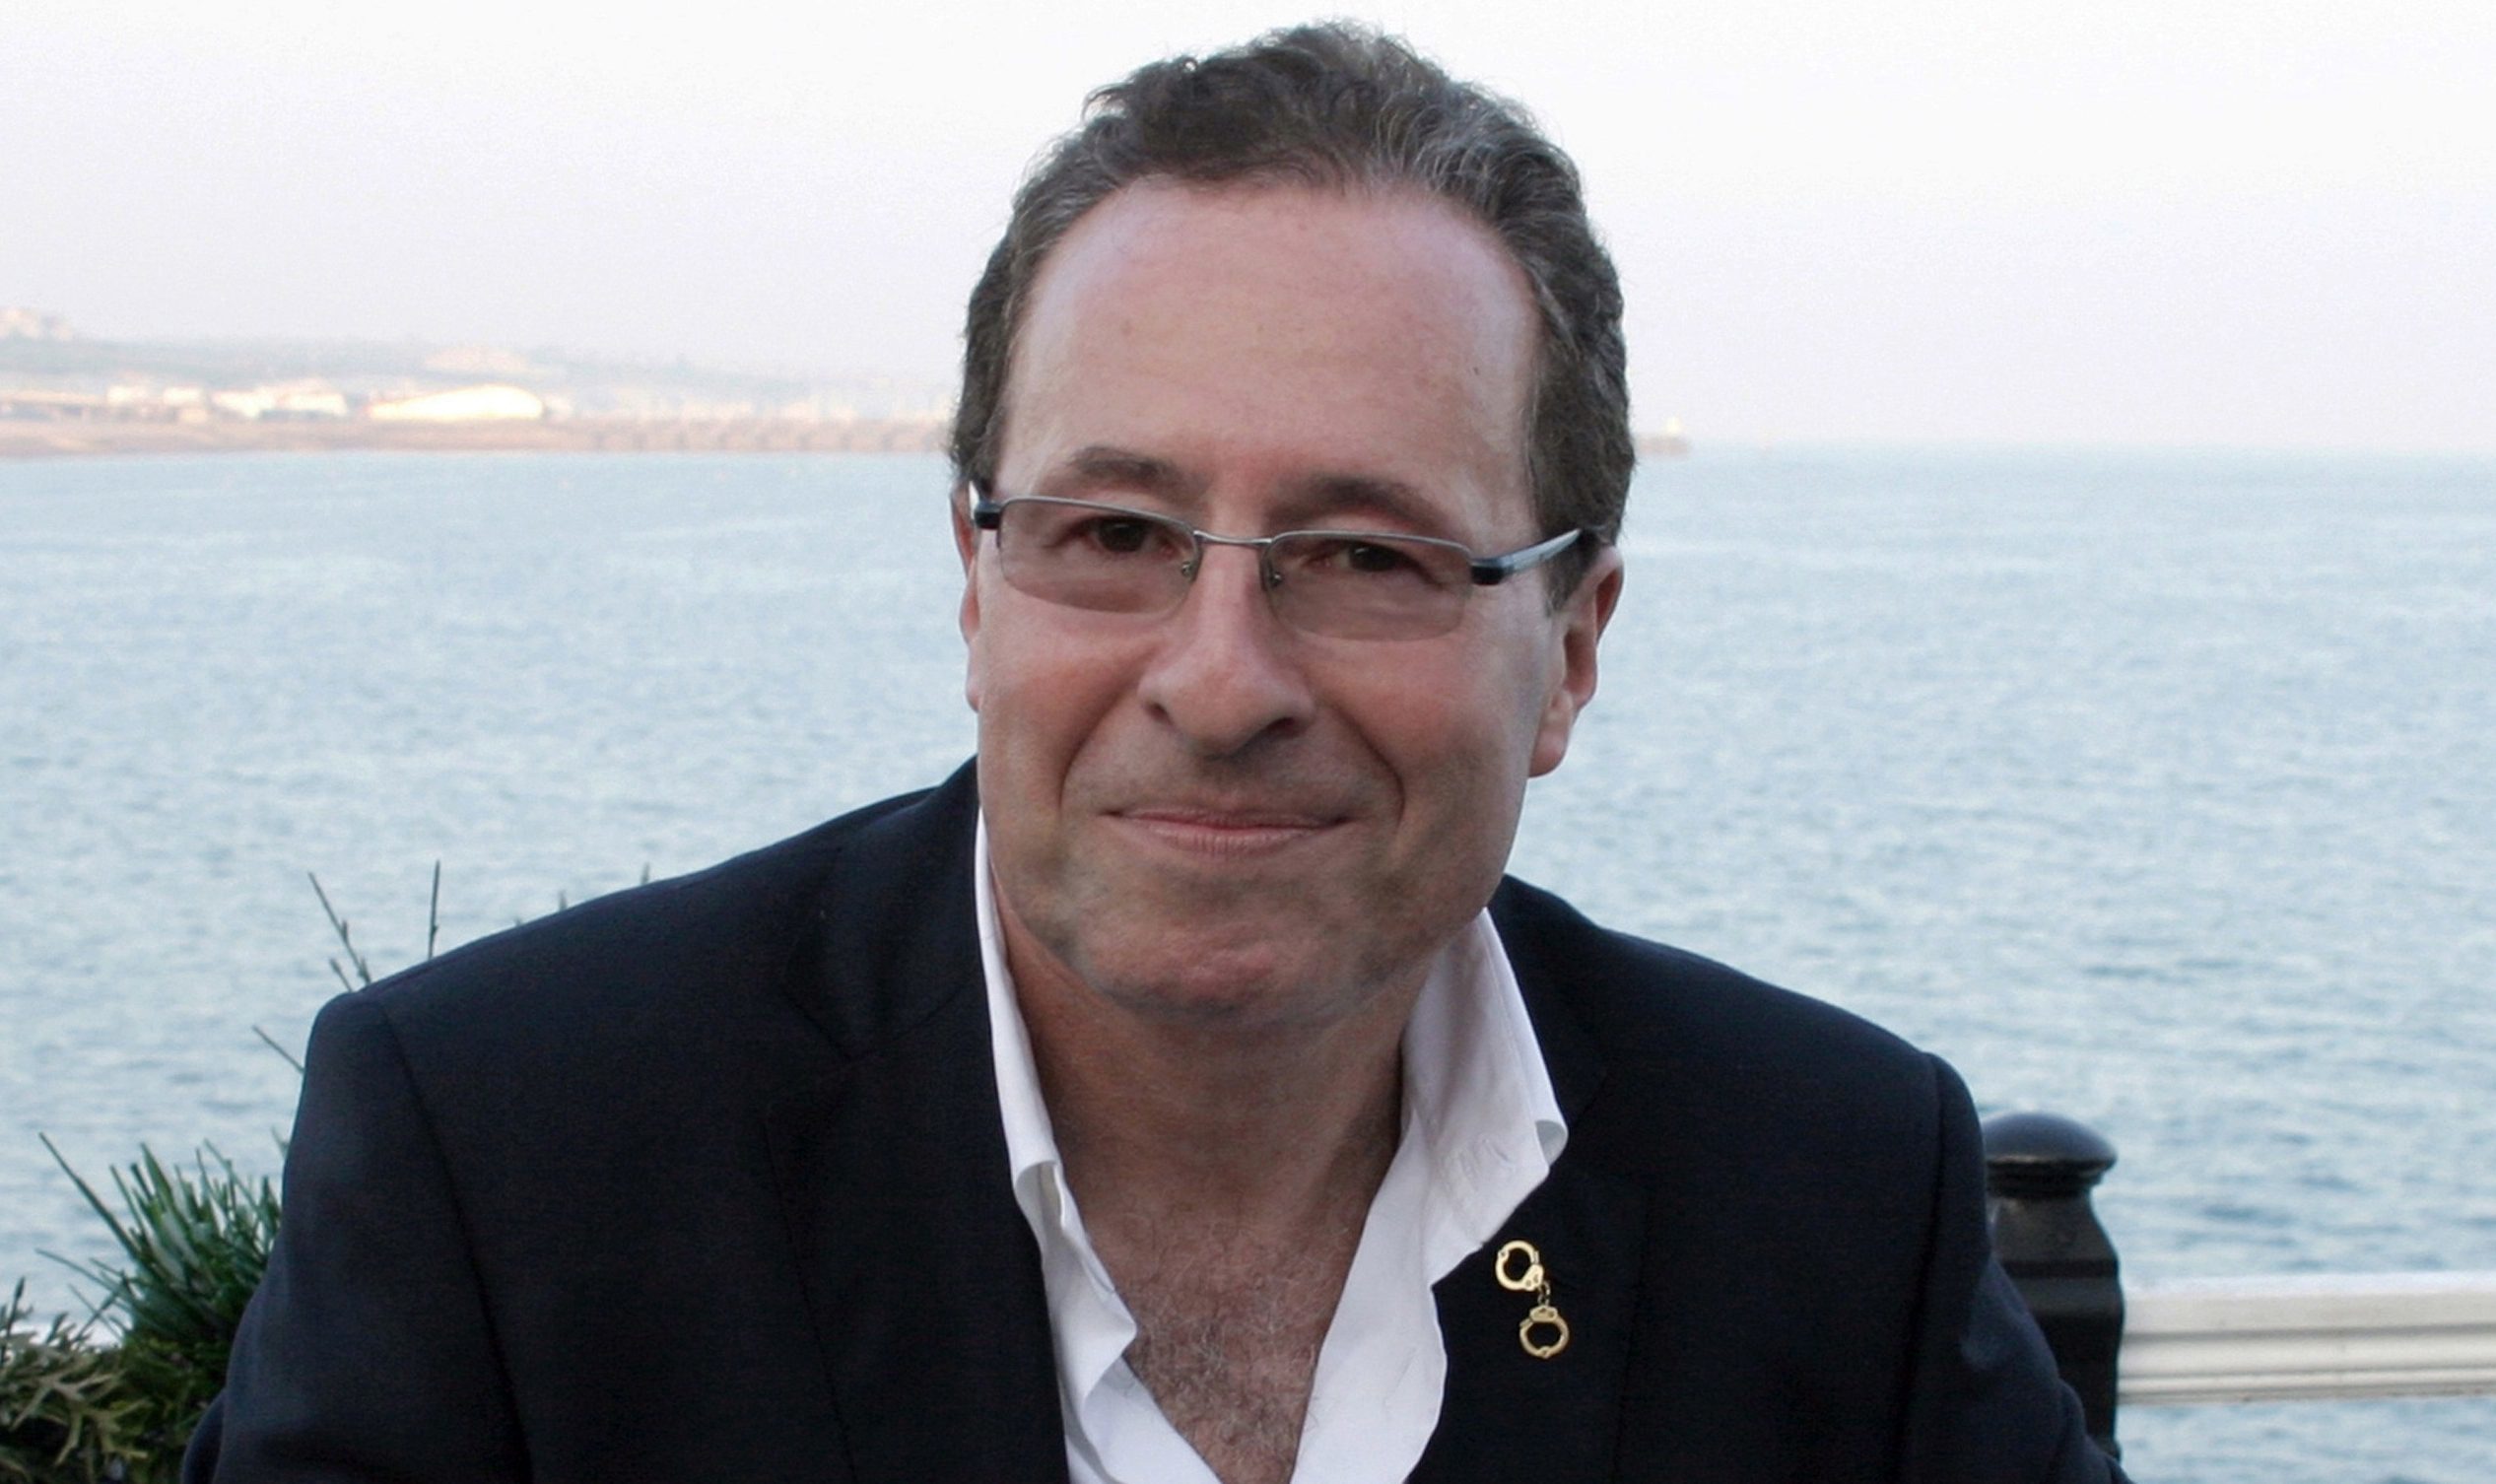 Author Peter James